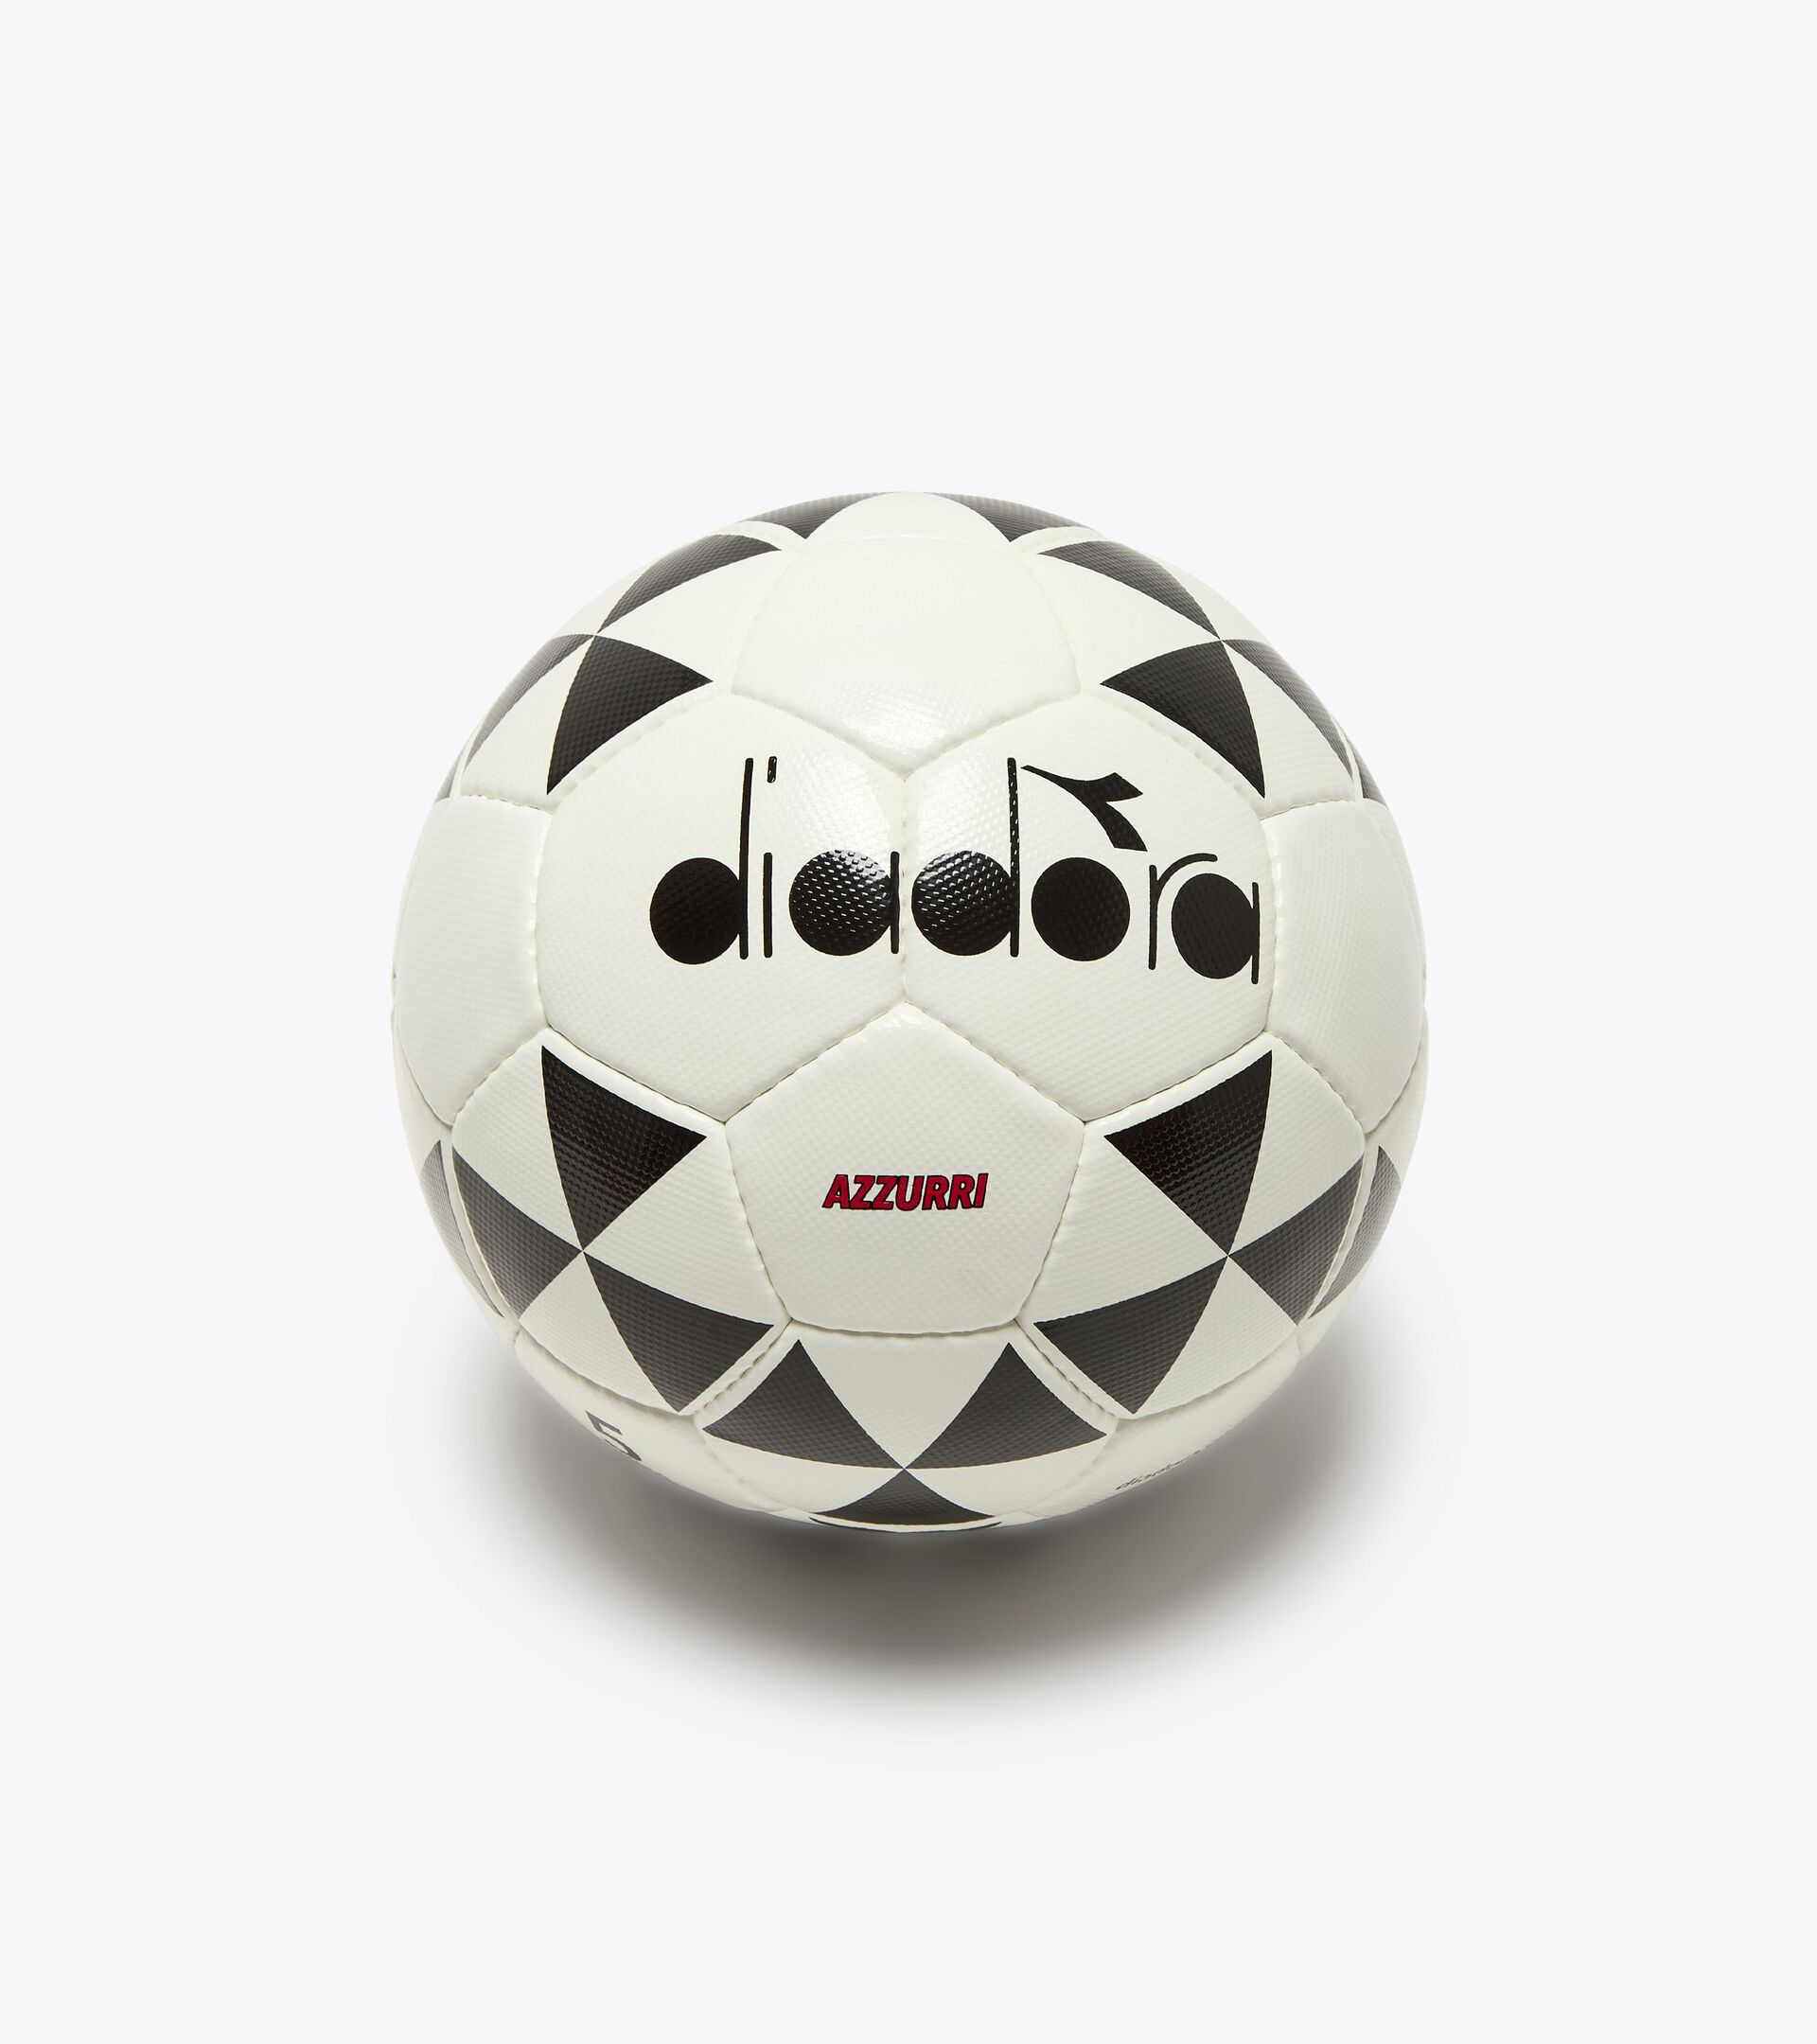 Soccer ball - size 5 AZZURRI 5 OPTICAL WHITE/BLACK - Diadora